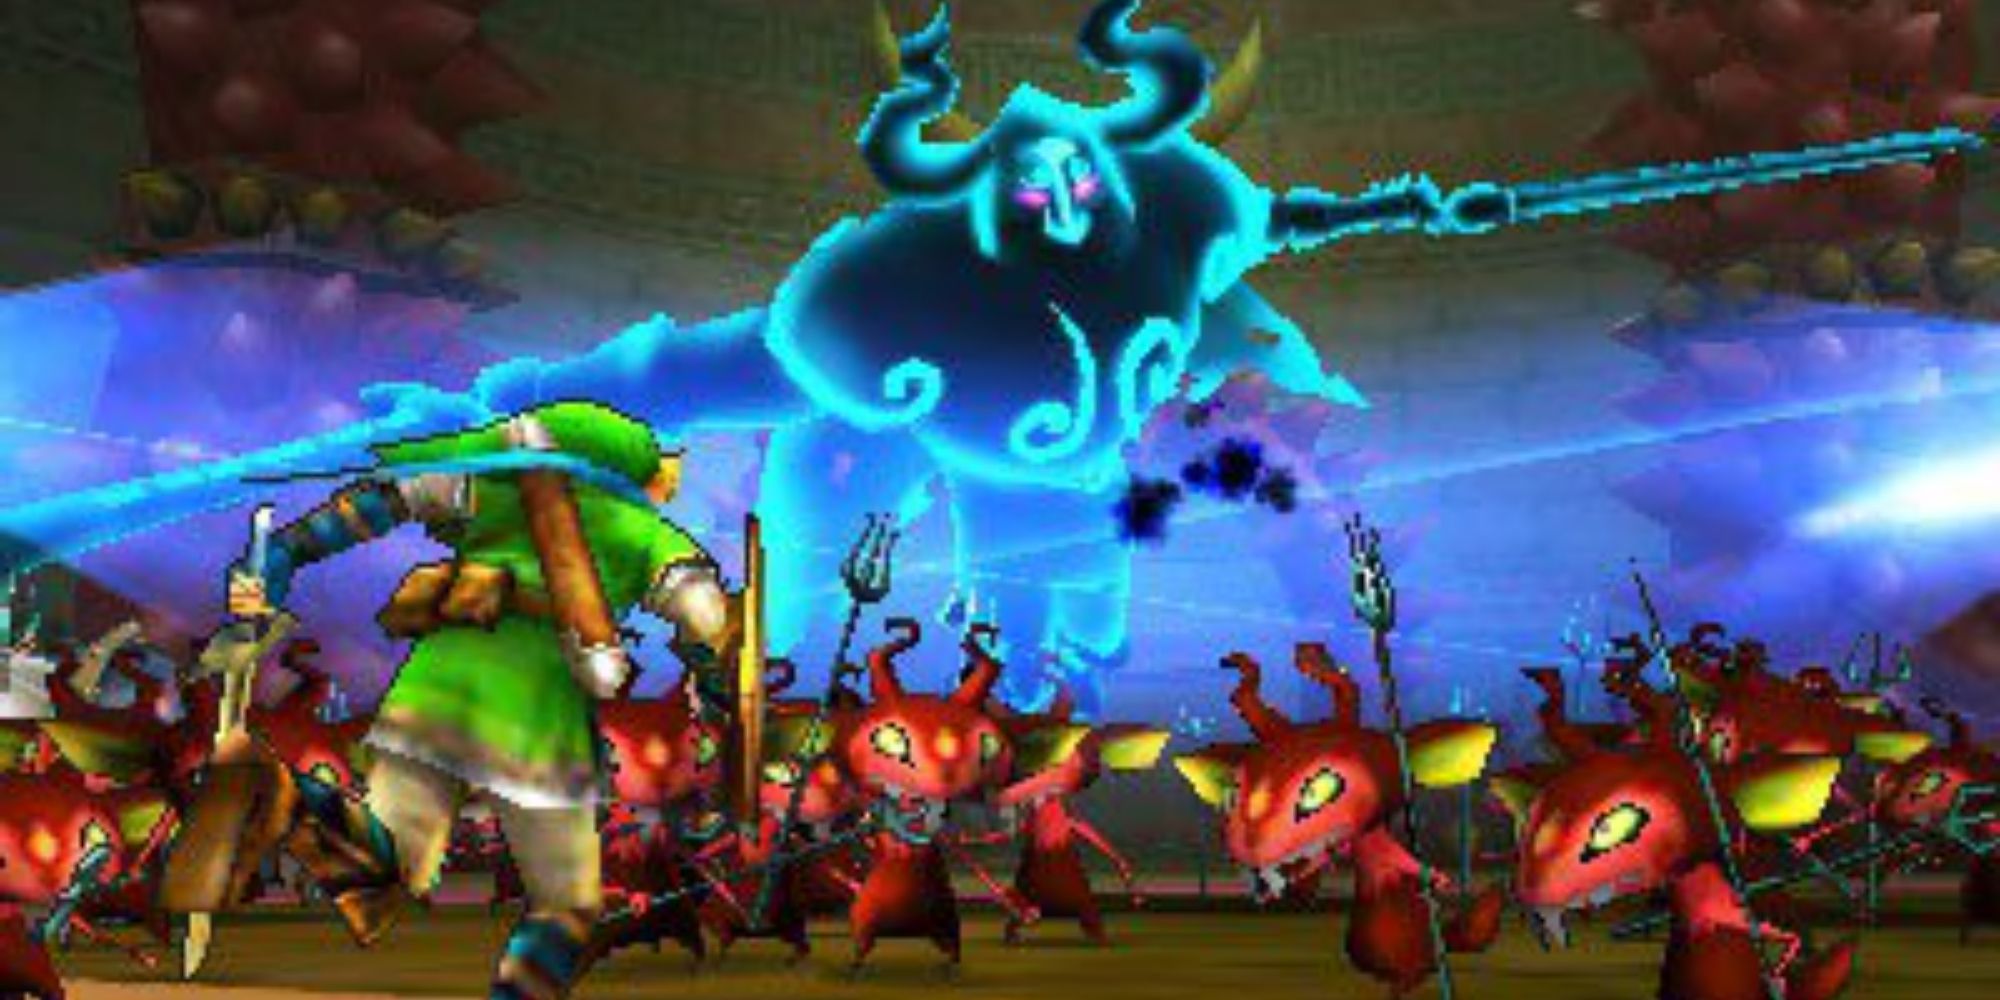 Link facing Phantom Ganon and Bokoblins in Hyrule Warriors